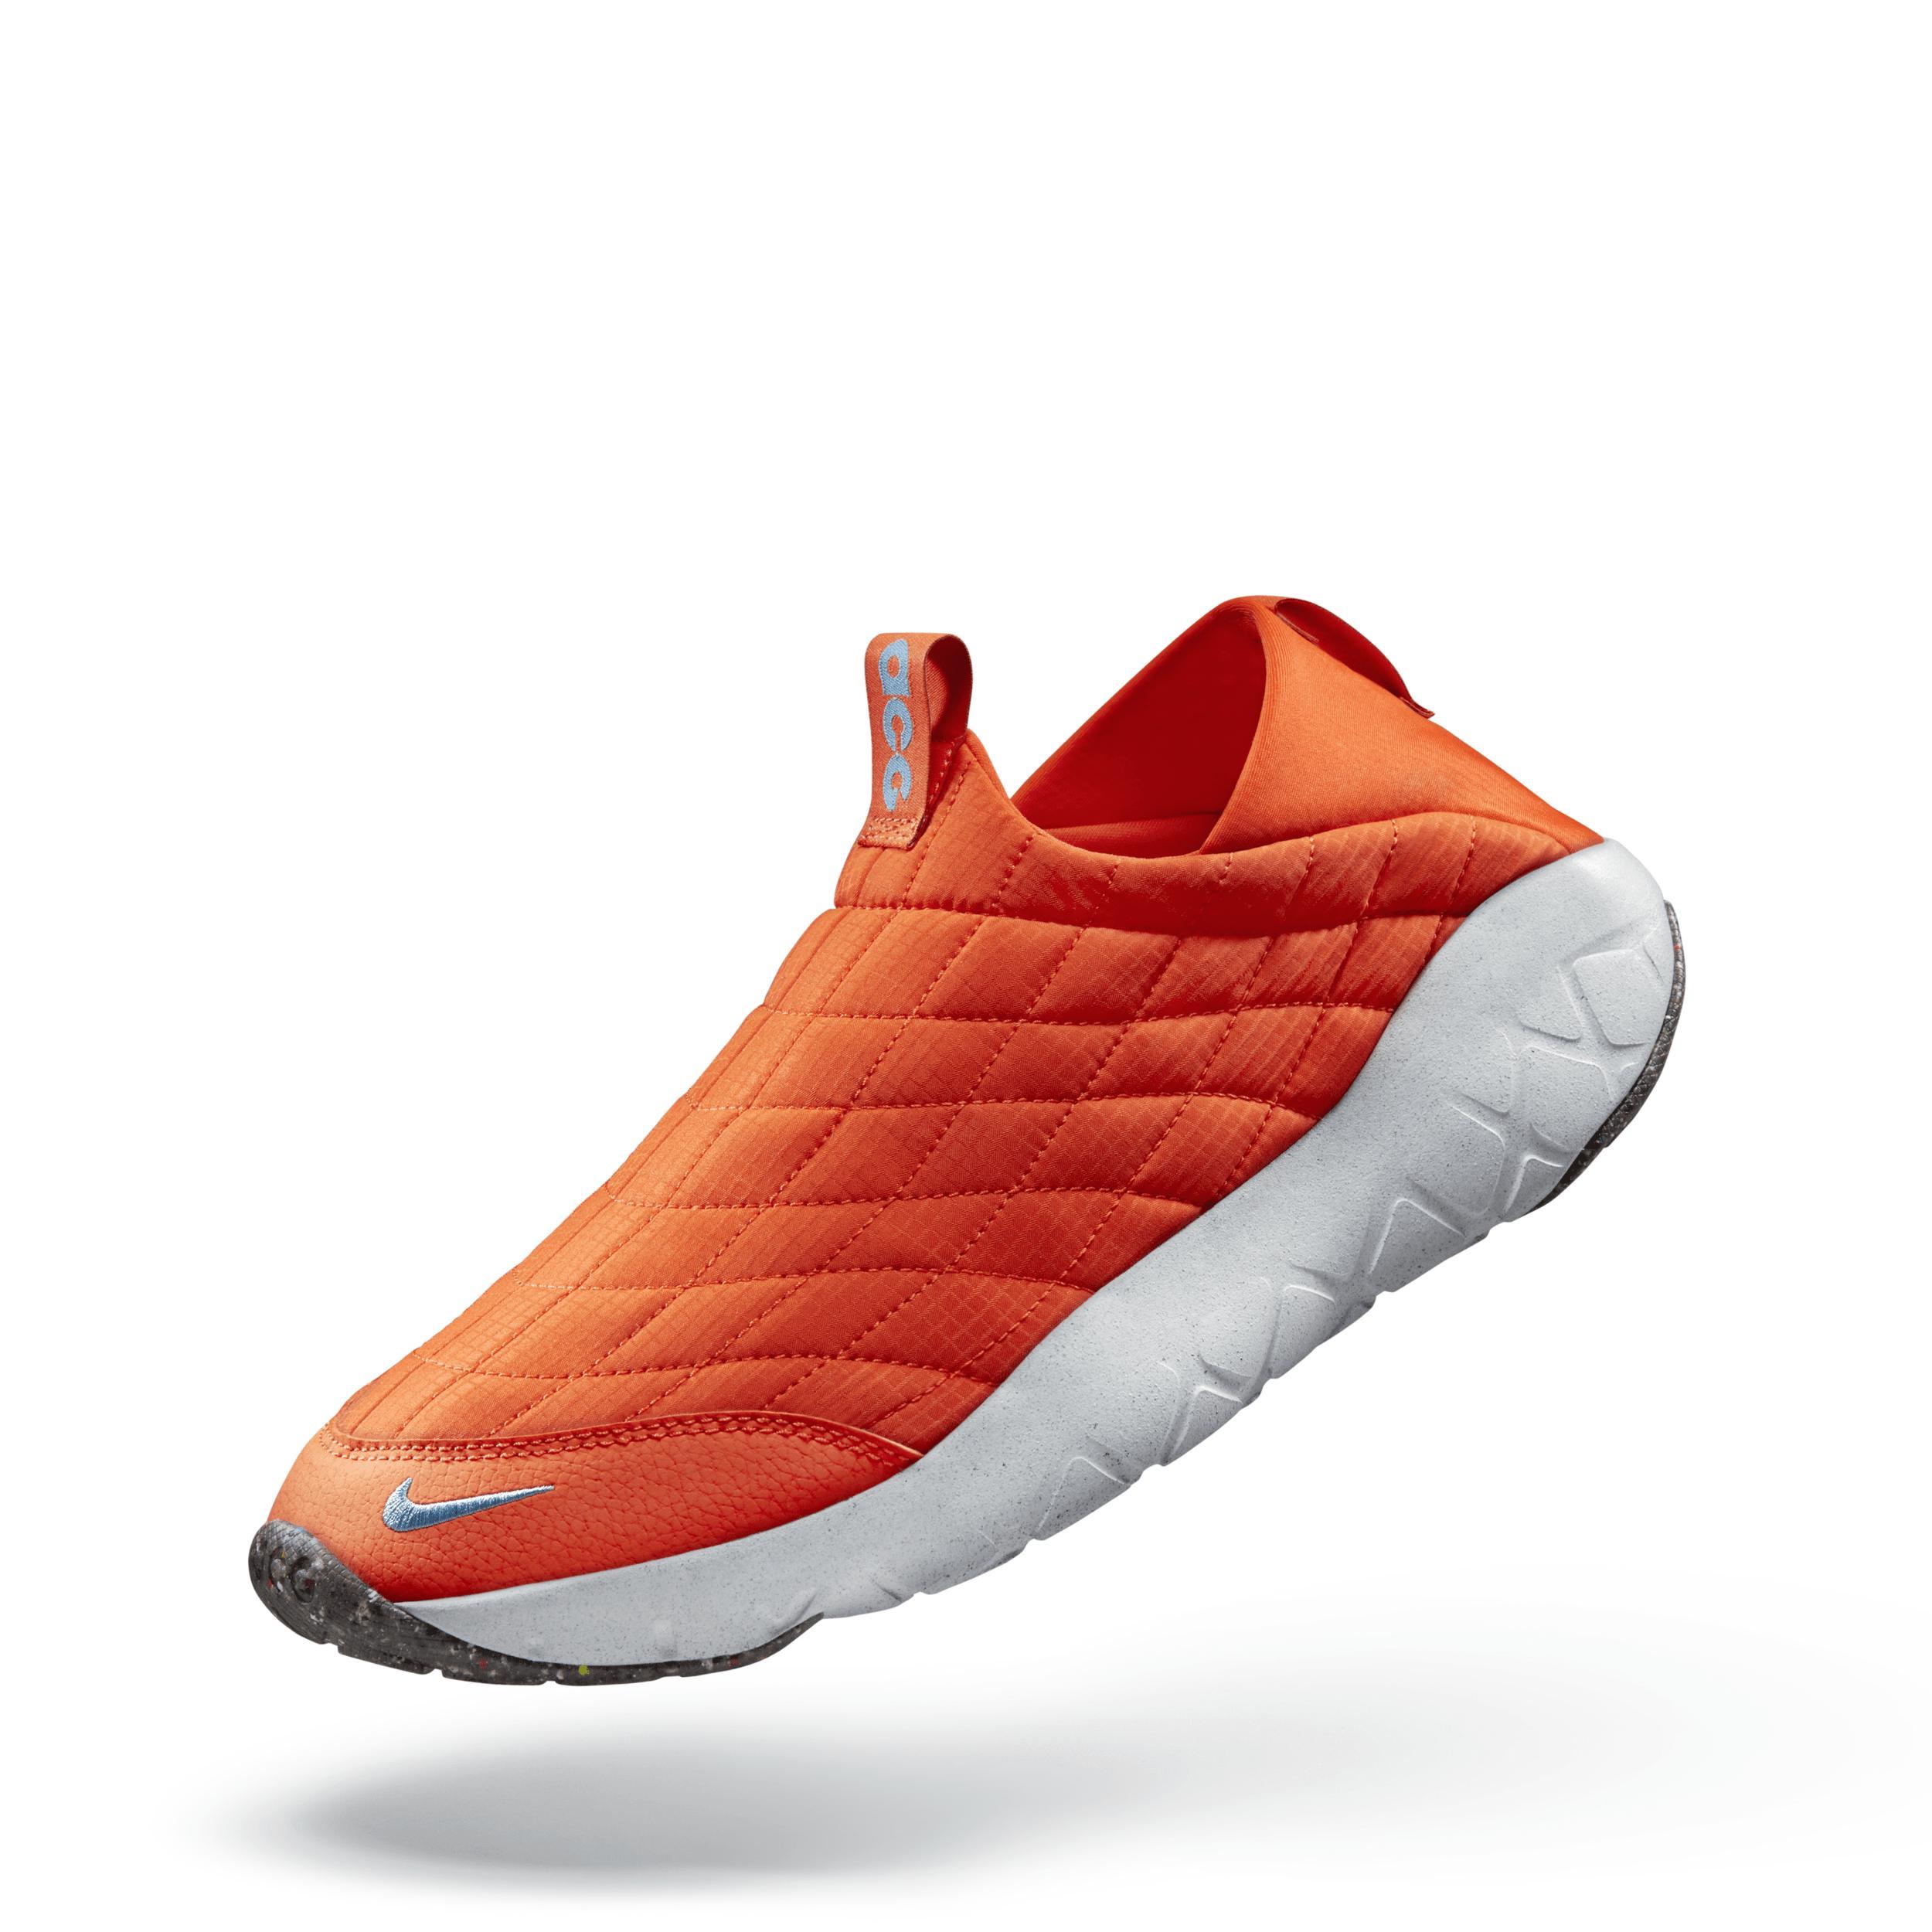 Men's Nike ACG Moc 3.5 Shoes  Product Image